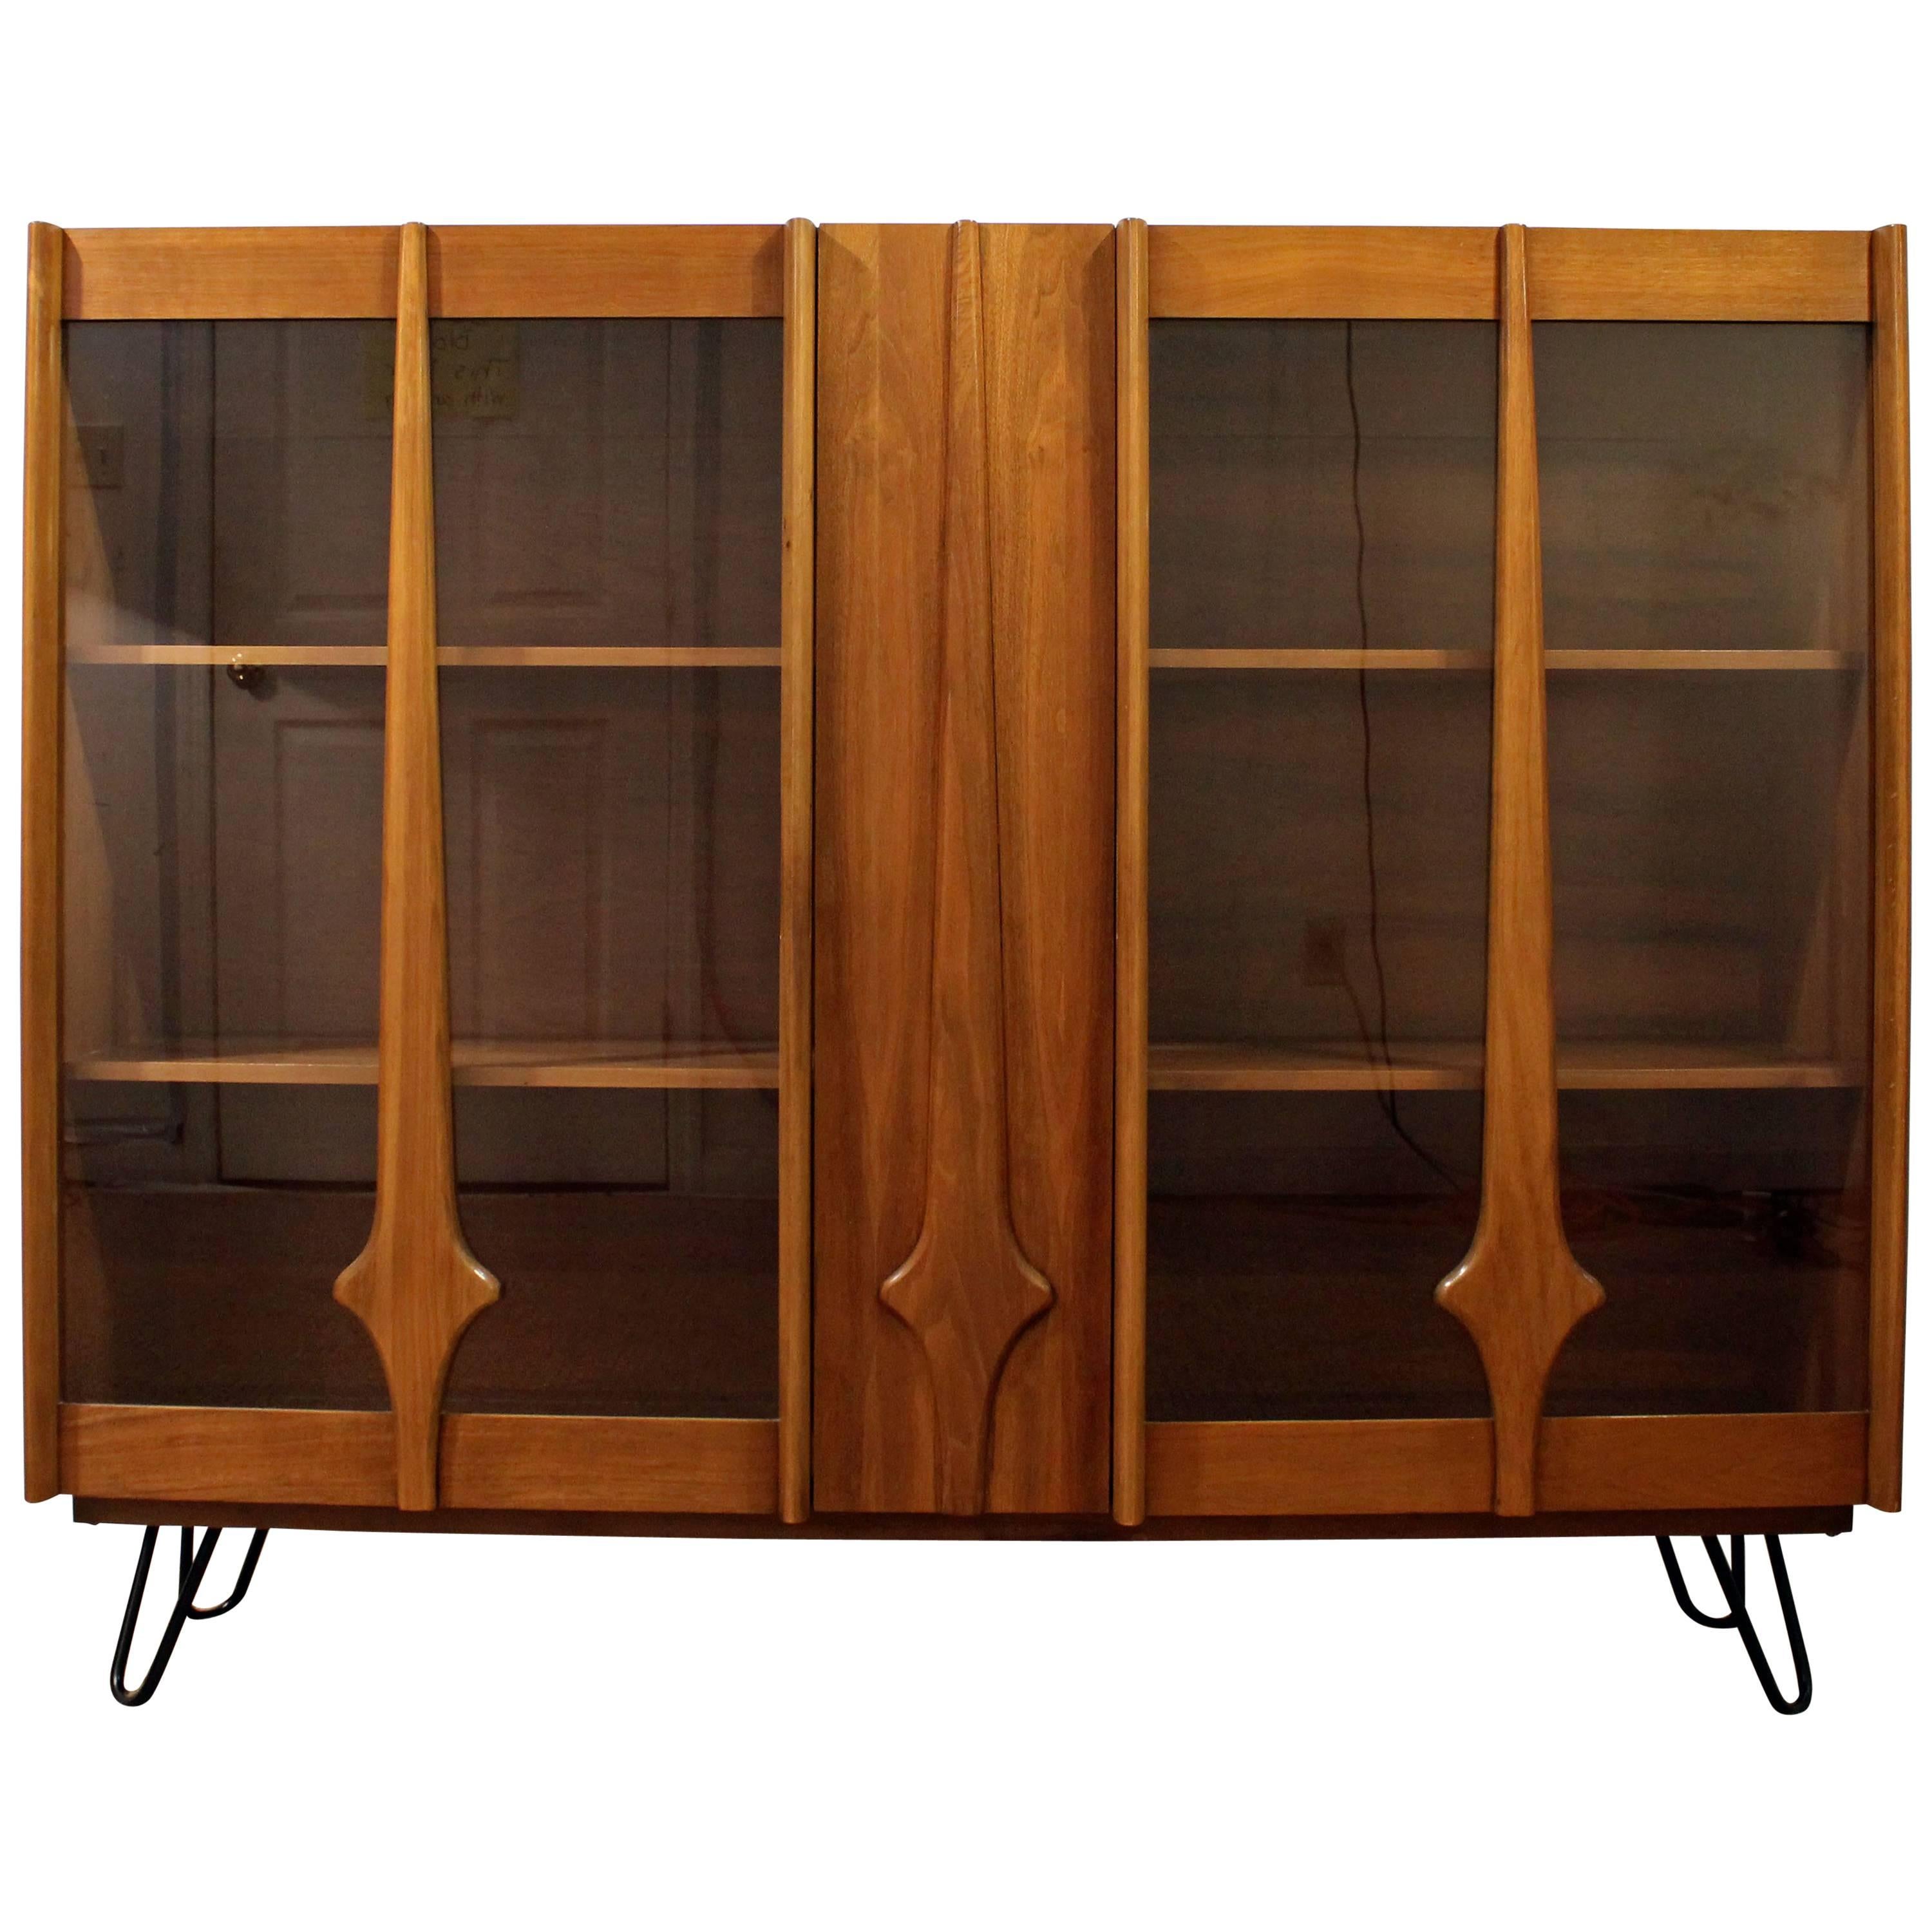 Mid-Century Modern Walnut Bookcase or Display Cabinet on Hairpin Legs